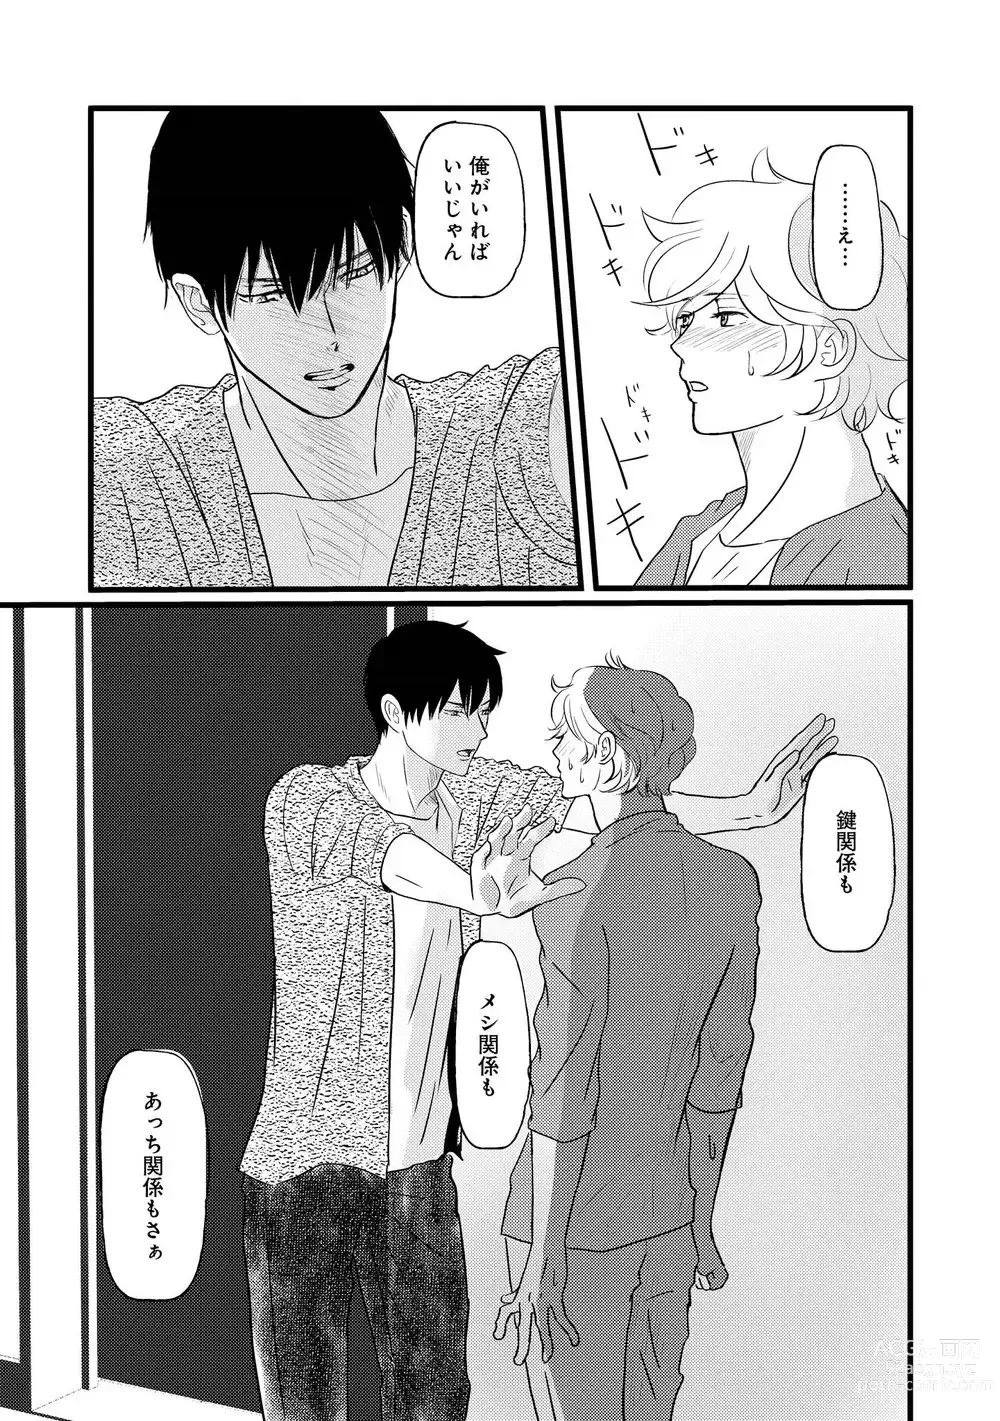 Page 144 of manga AHOERO